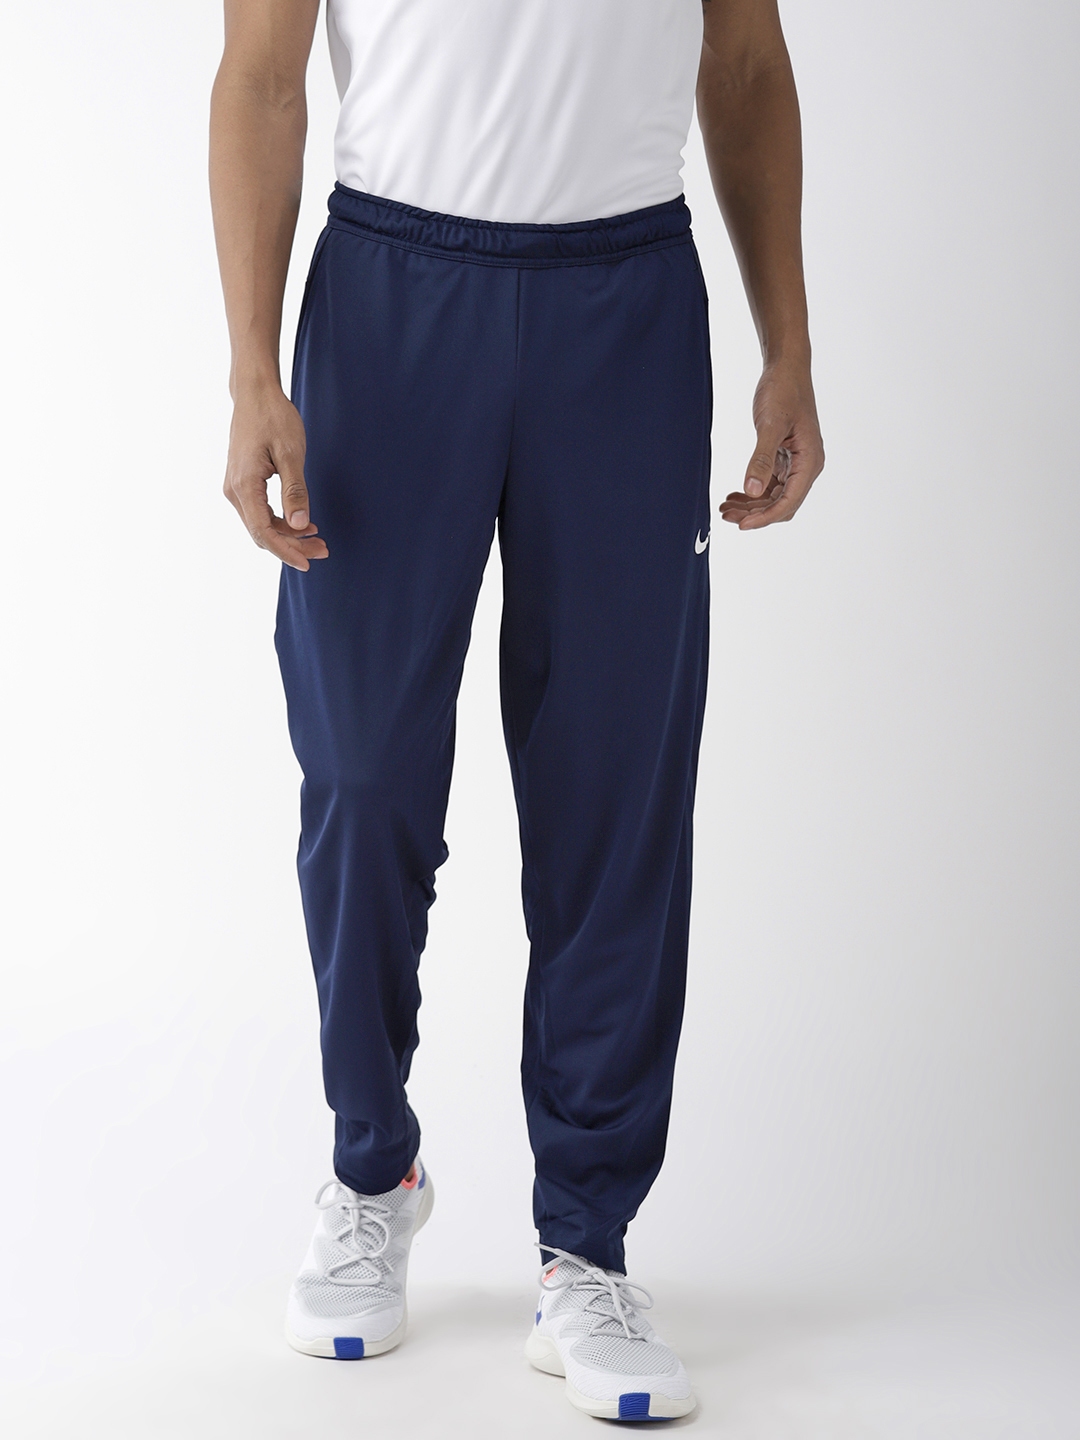 Buy Nike Men Navy Blue Solid Regular Fit AS TS Dri FIT Cricket